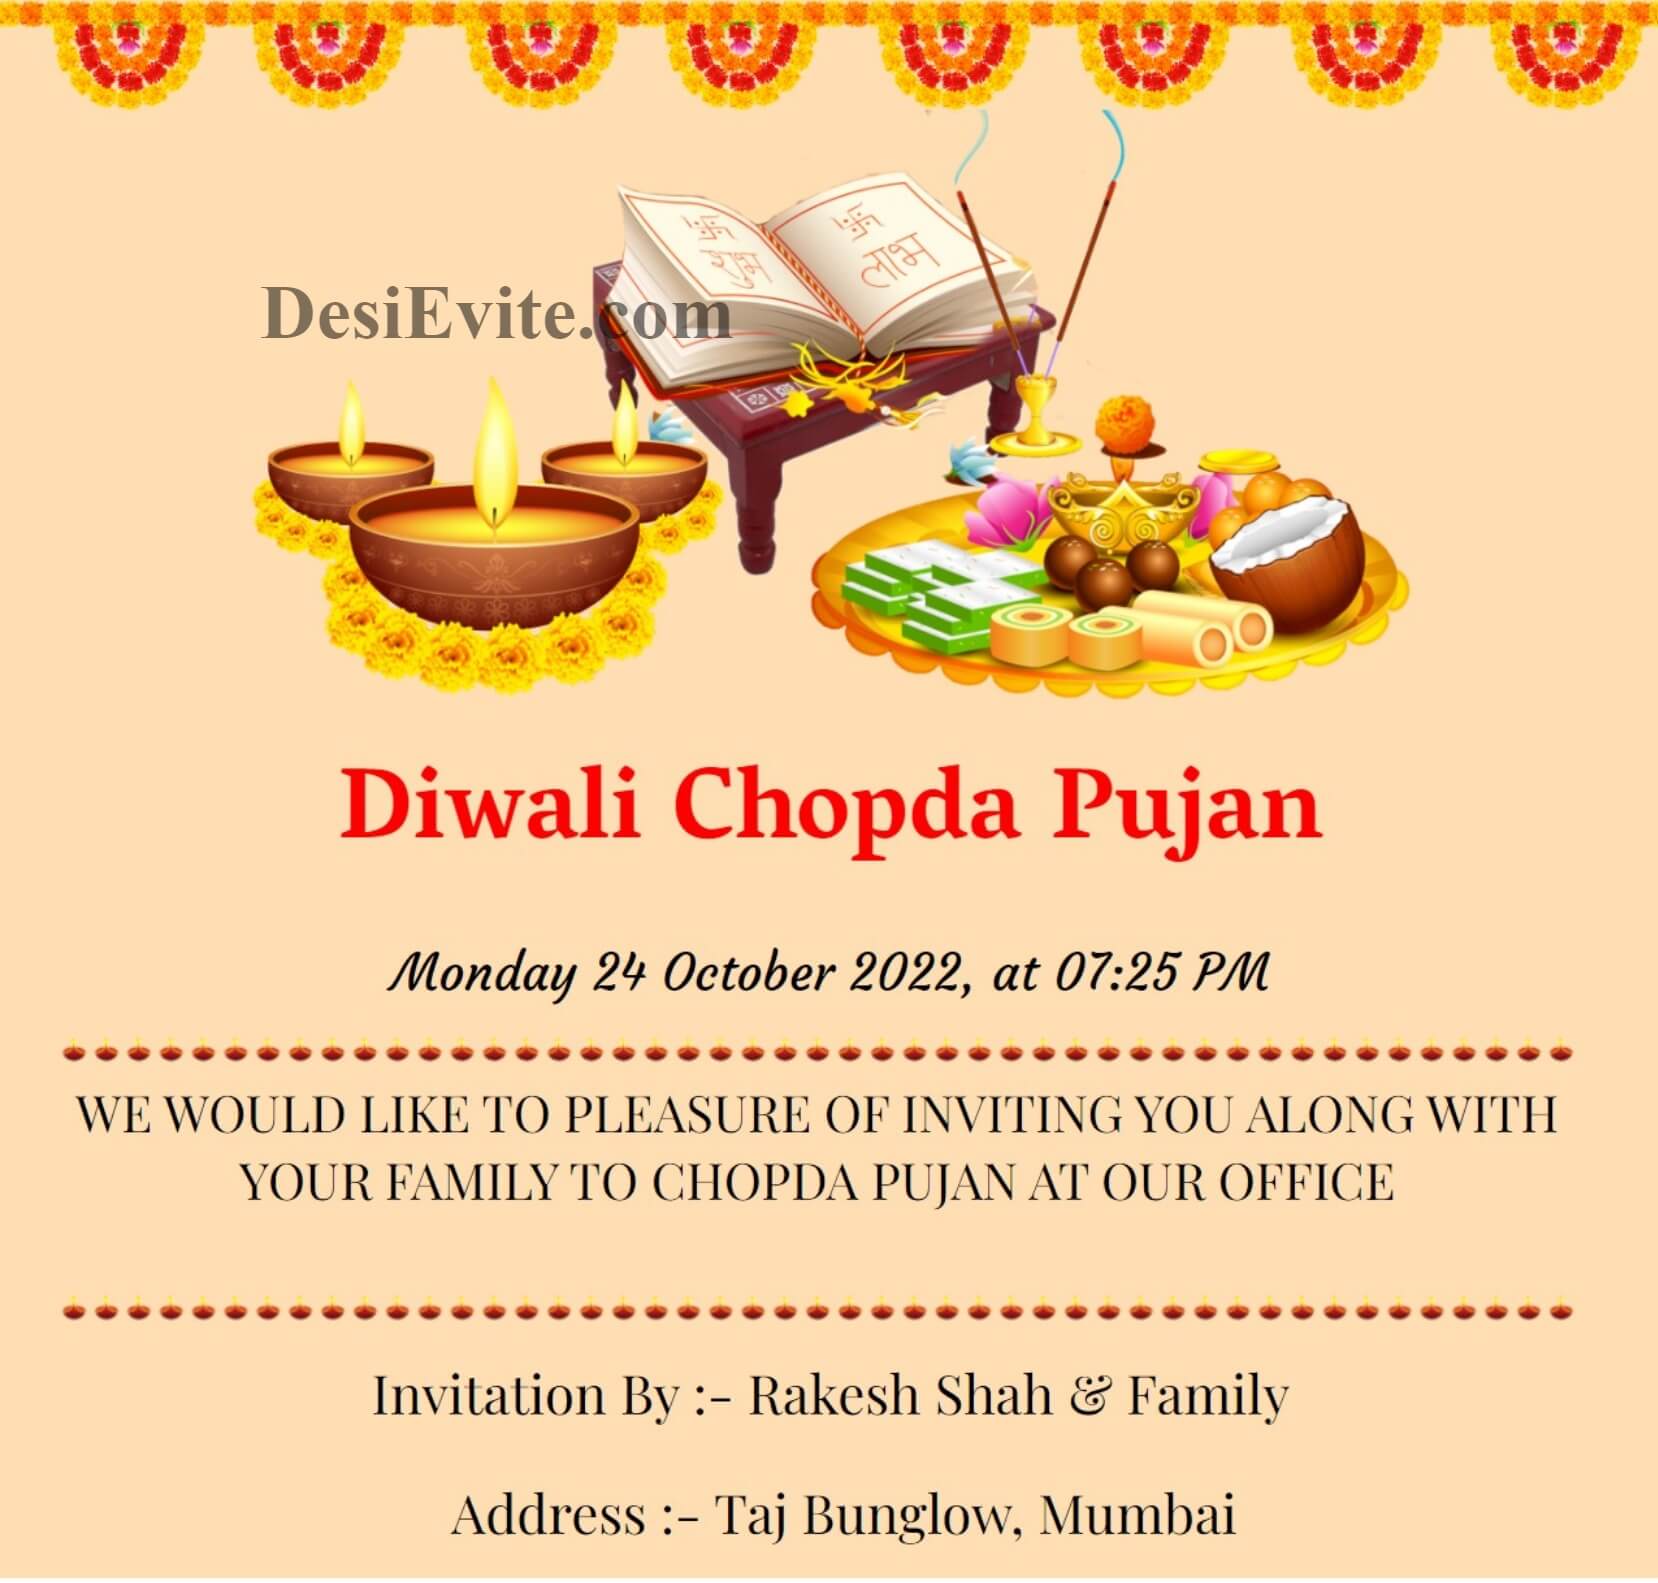 Diwali Chopda Pujan Invitation Card